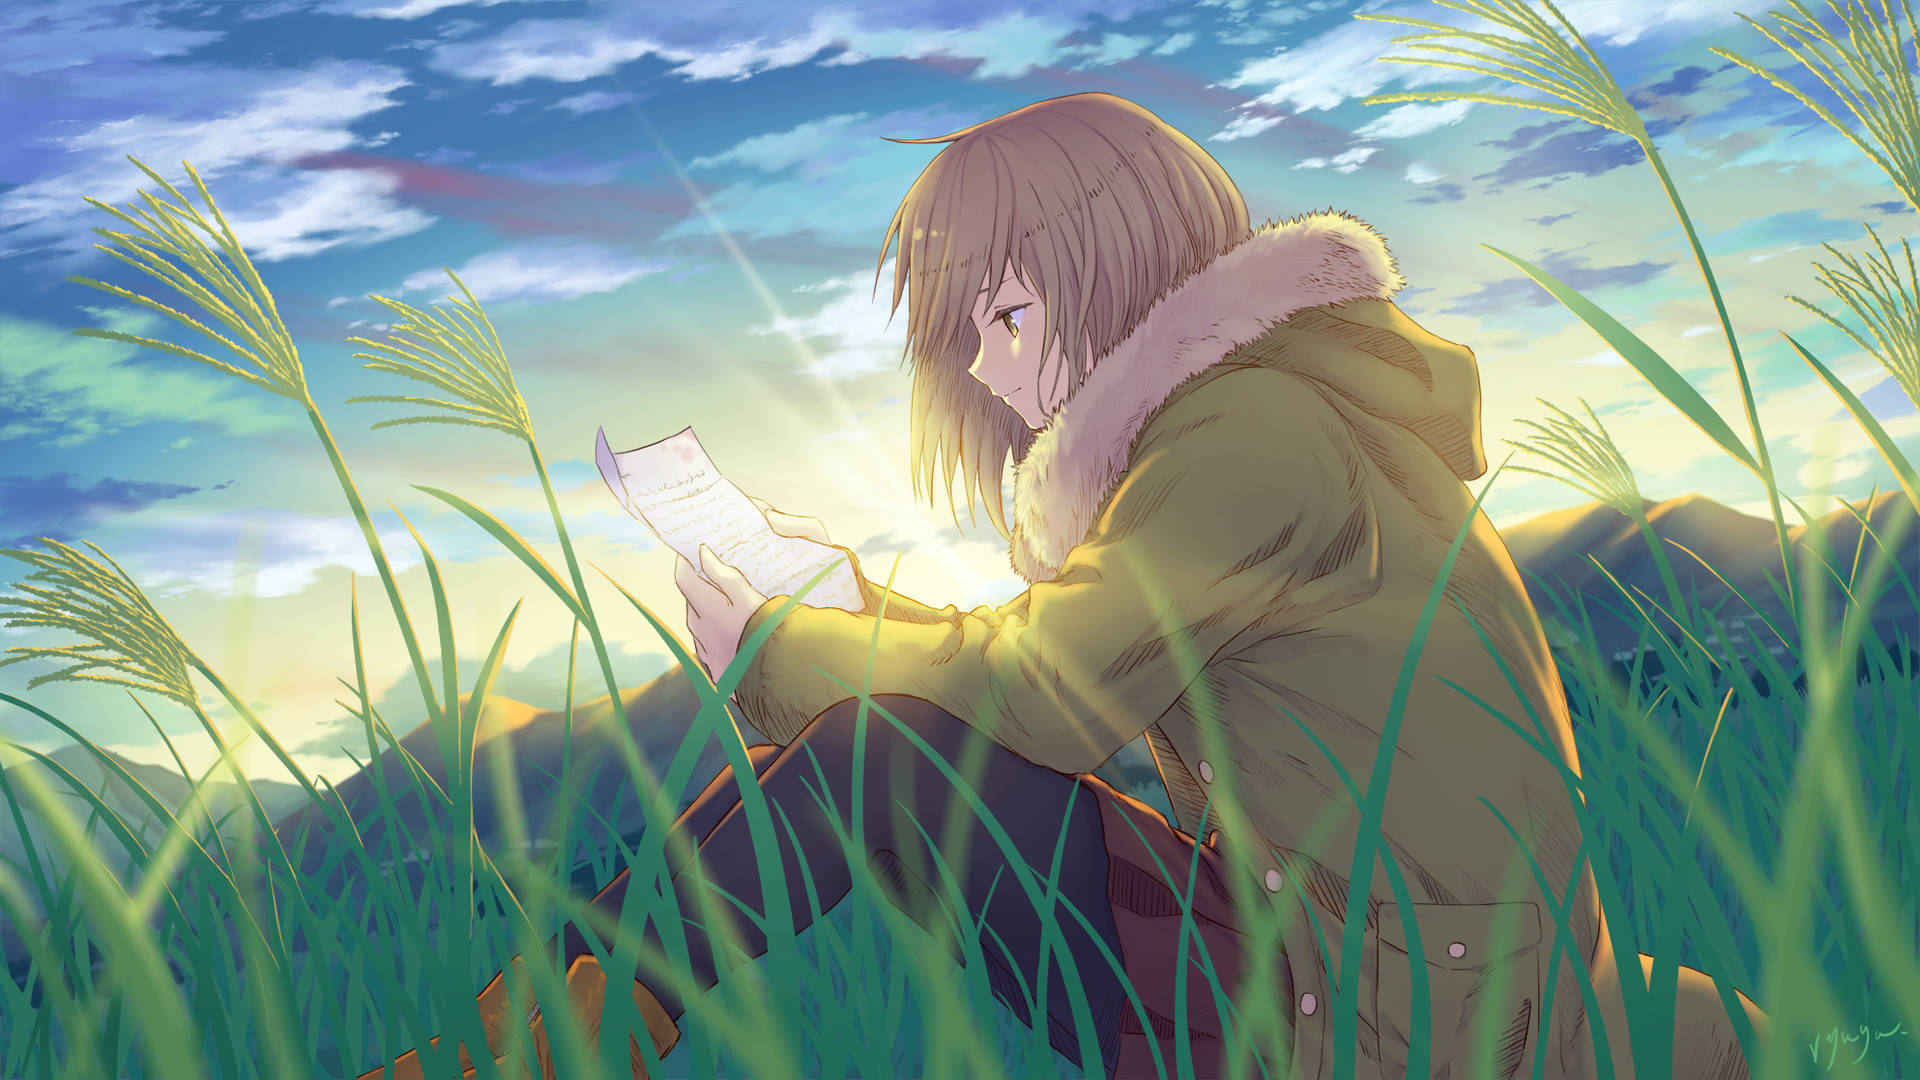 Anime Girl Reading Book In Grass Wallpaper